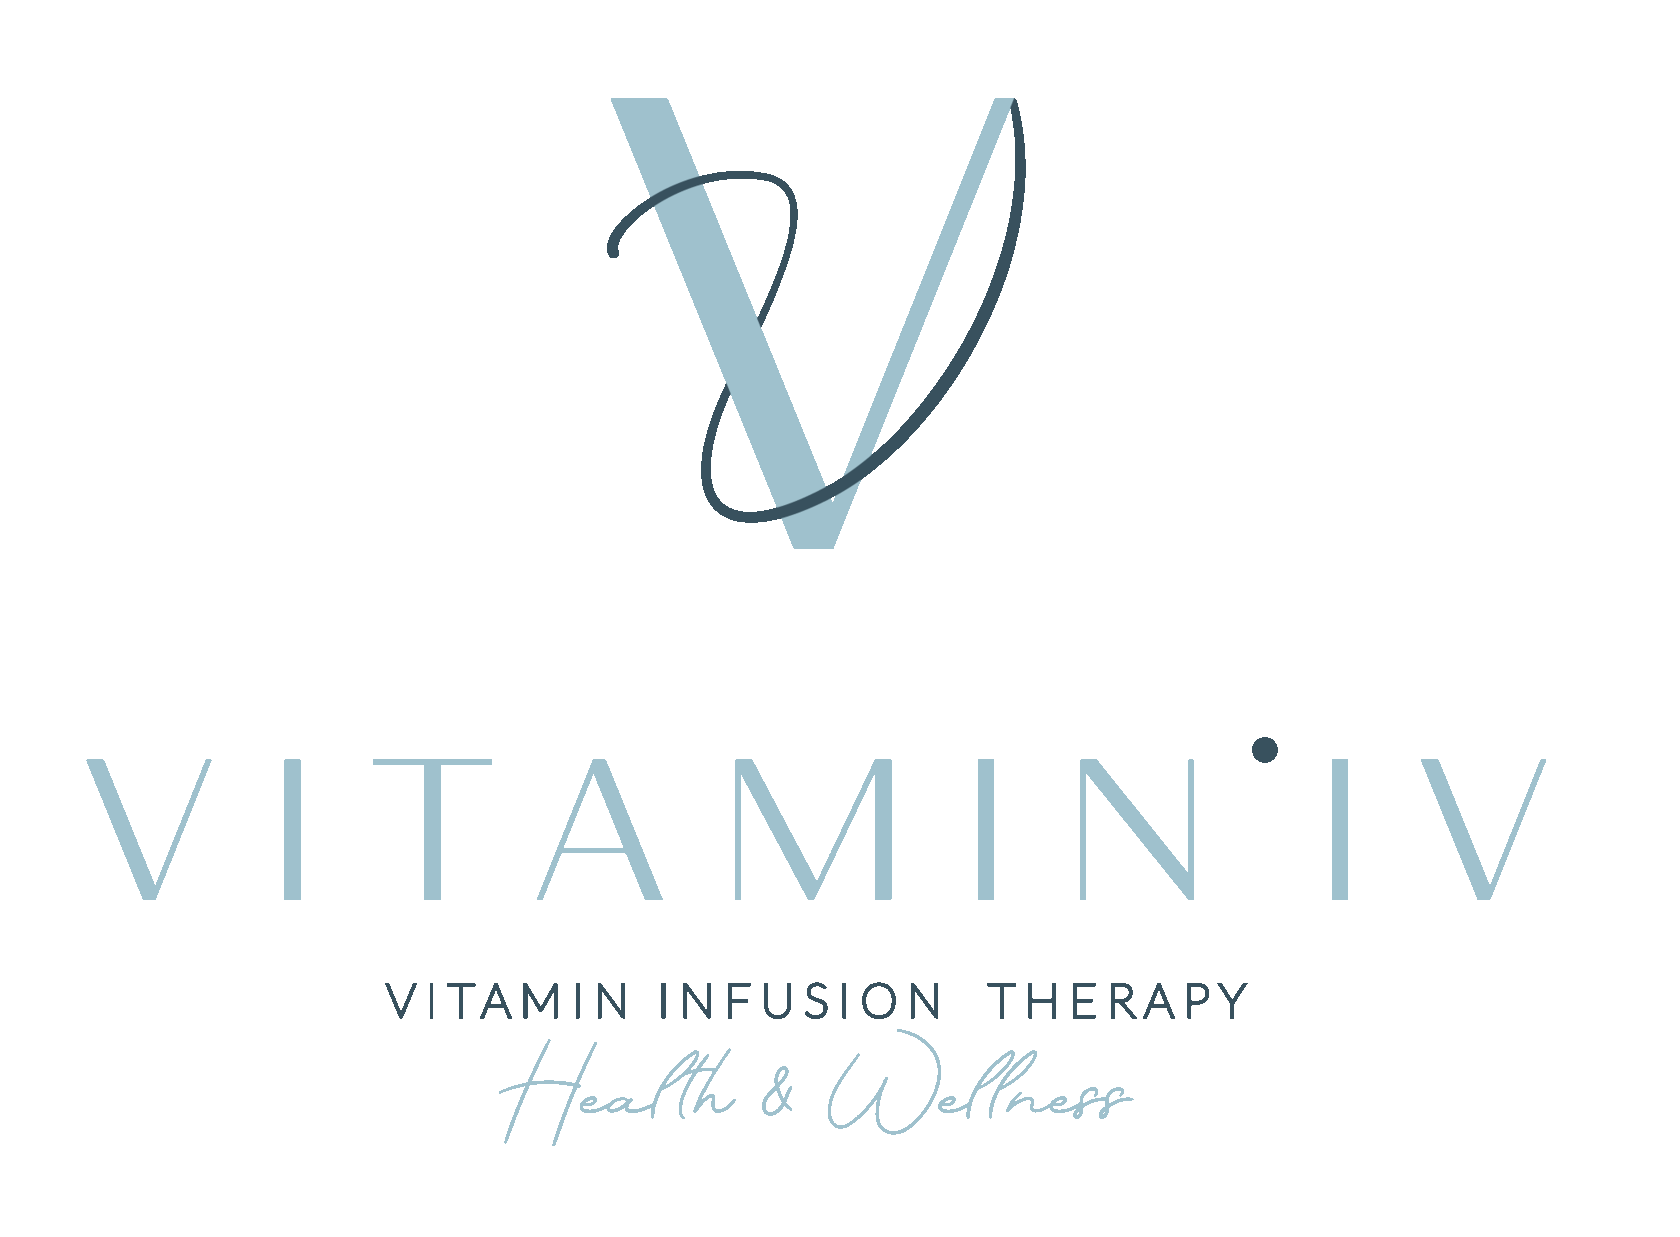  VITAMIN IV VITAMIN INFUSION TERAPY 